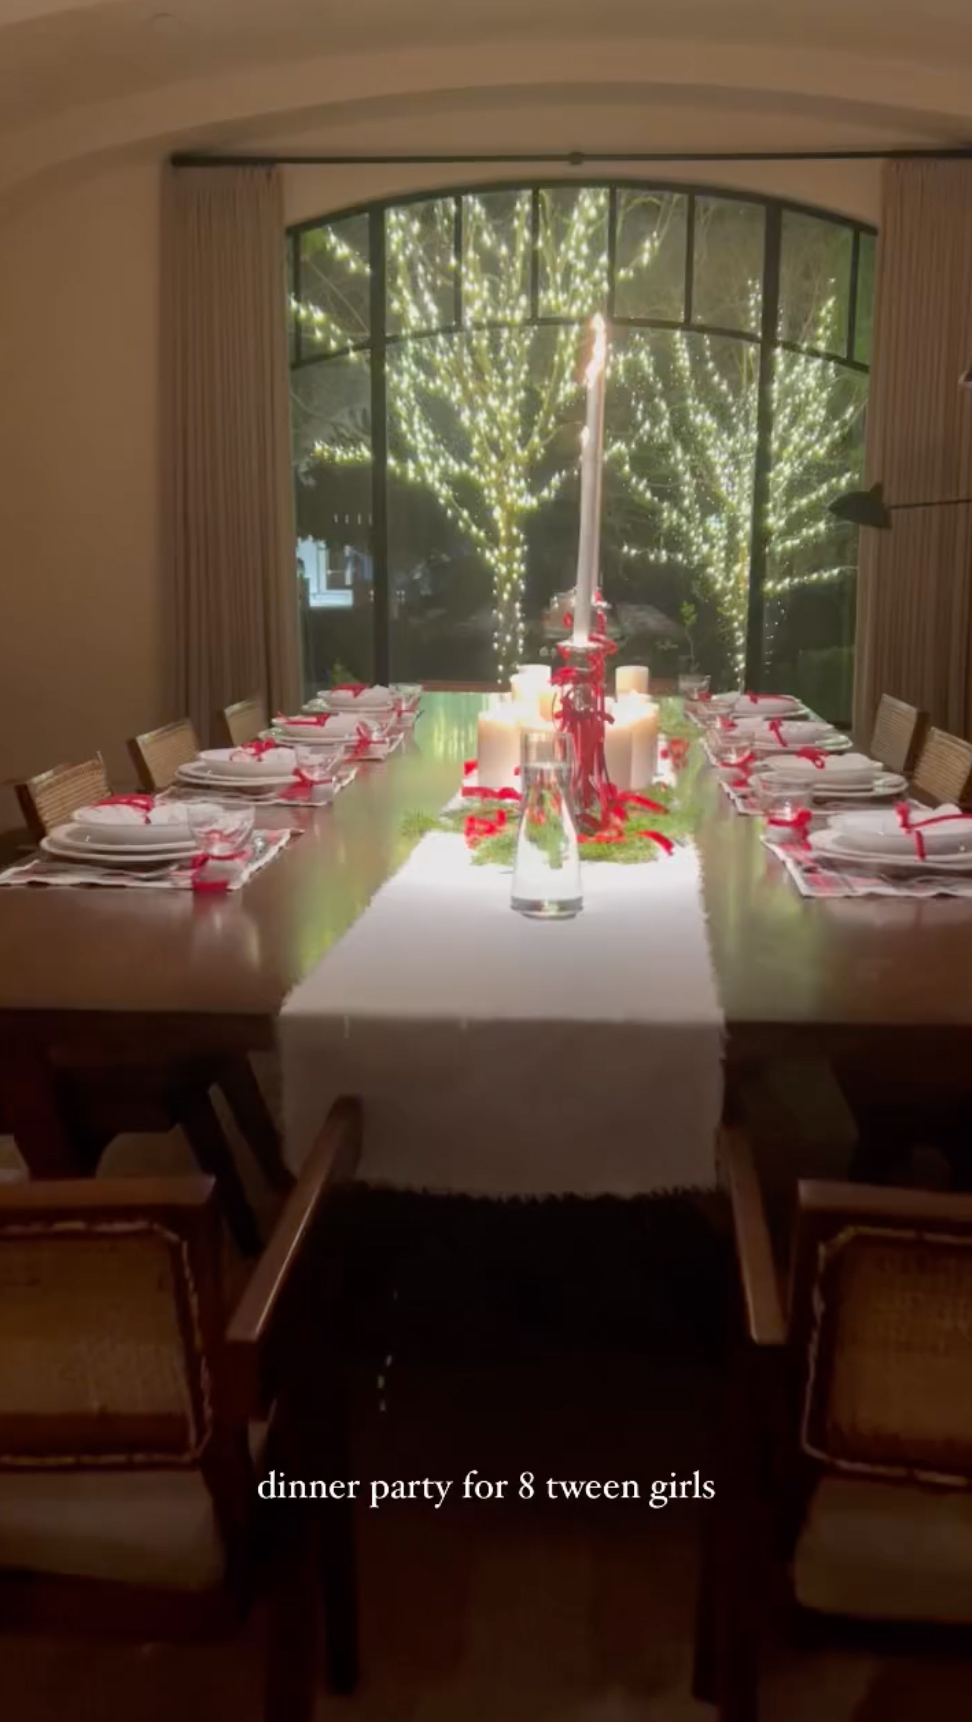 Kourtney Kardashian shows off modest Christmas tree as she prepares ‘dinner party’ at $9M mansion in new video.. TAKEN WITHOUT PERMISSION.. https://www.instagram.com/stories/kourtneykardash/3254511173352705429/